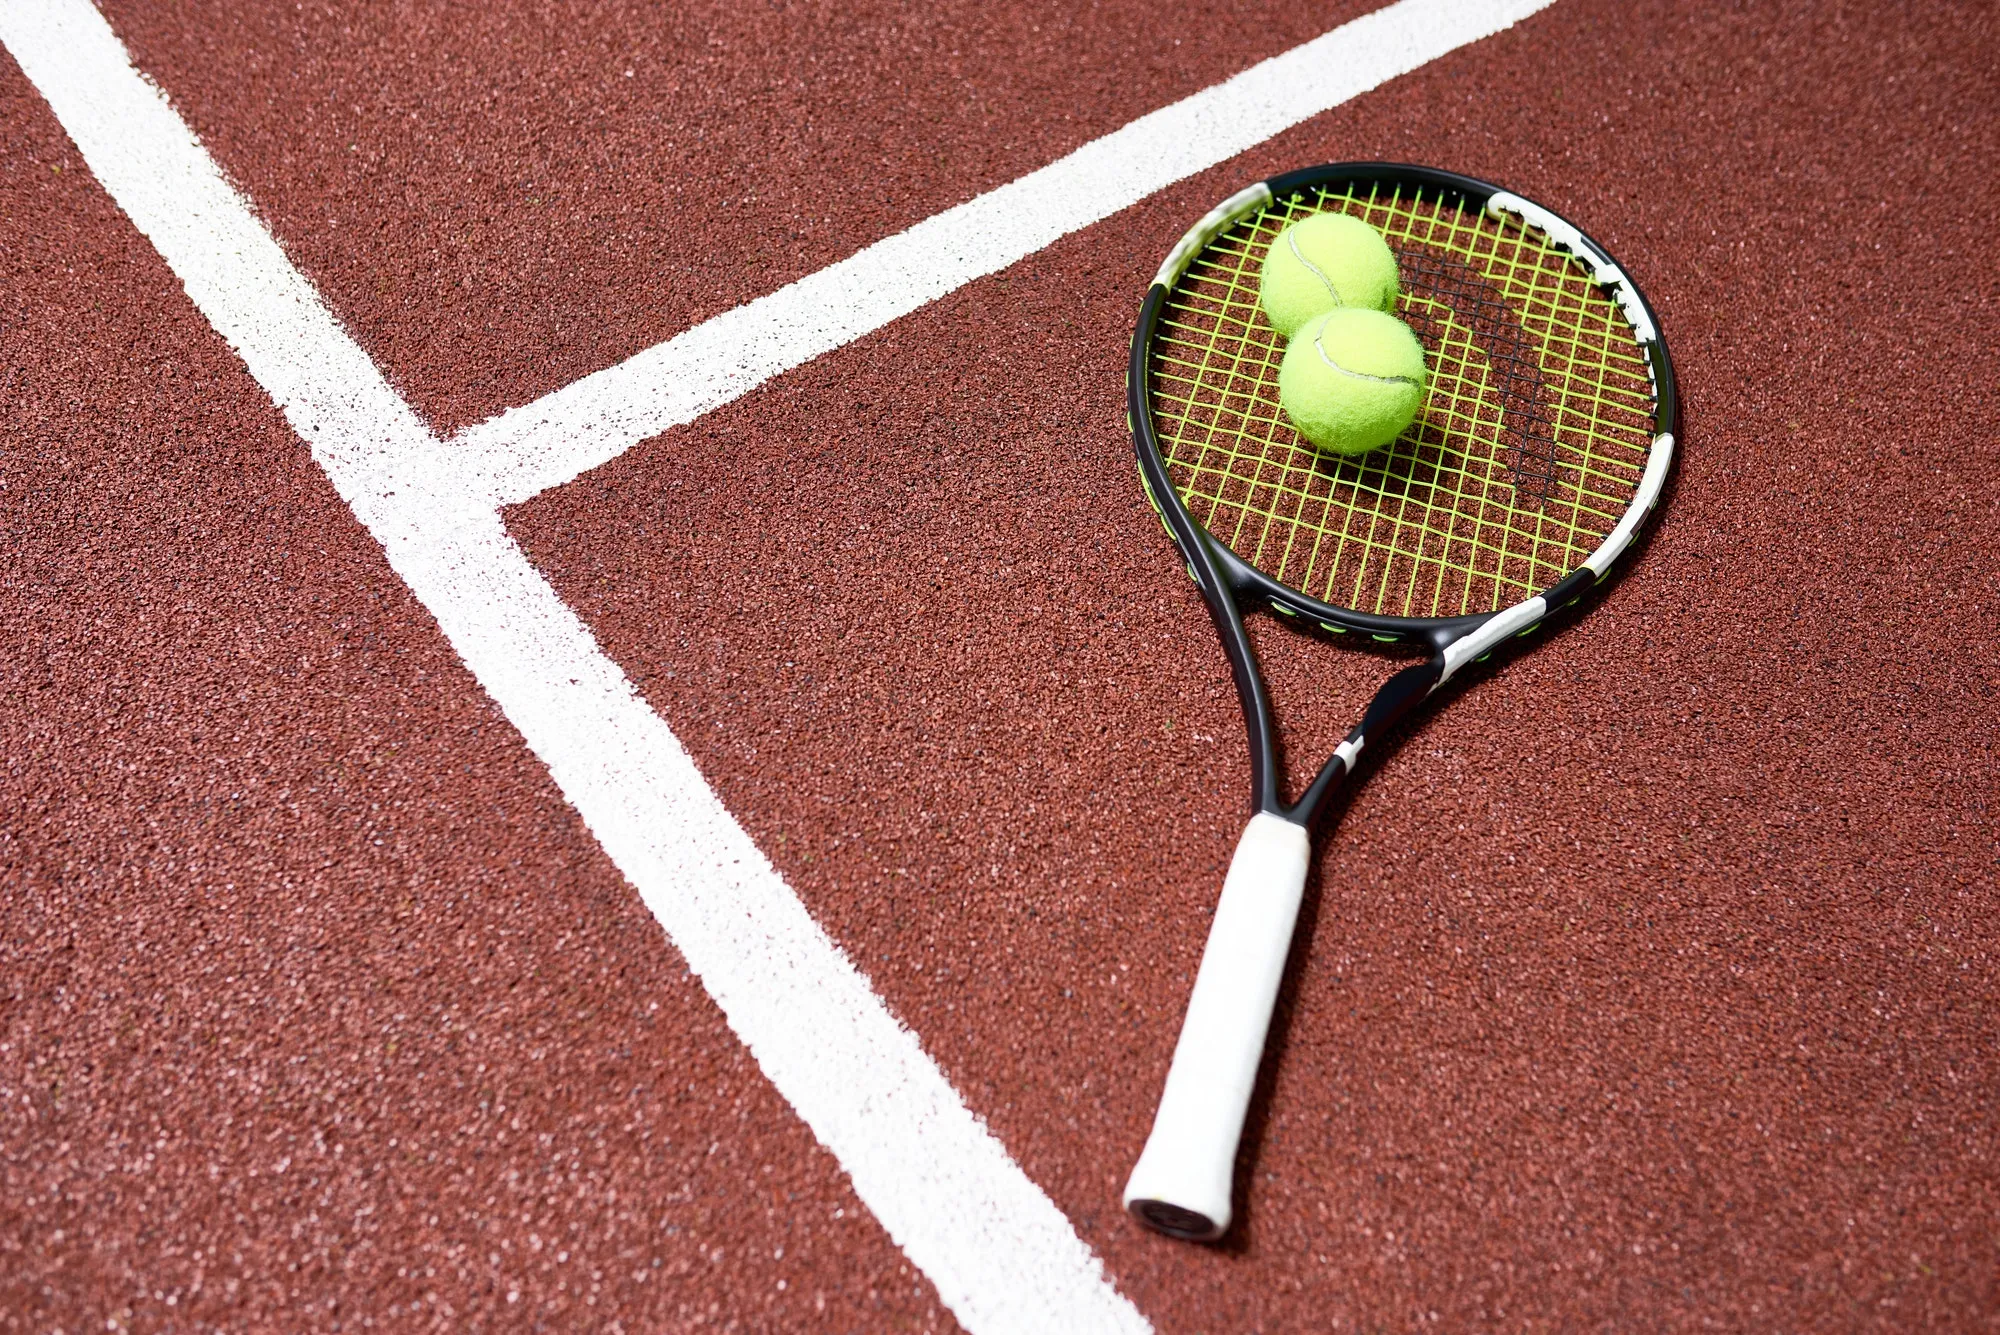 A tennis racket and two tennis balls on a tennis court - Tennis